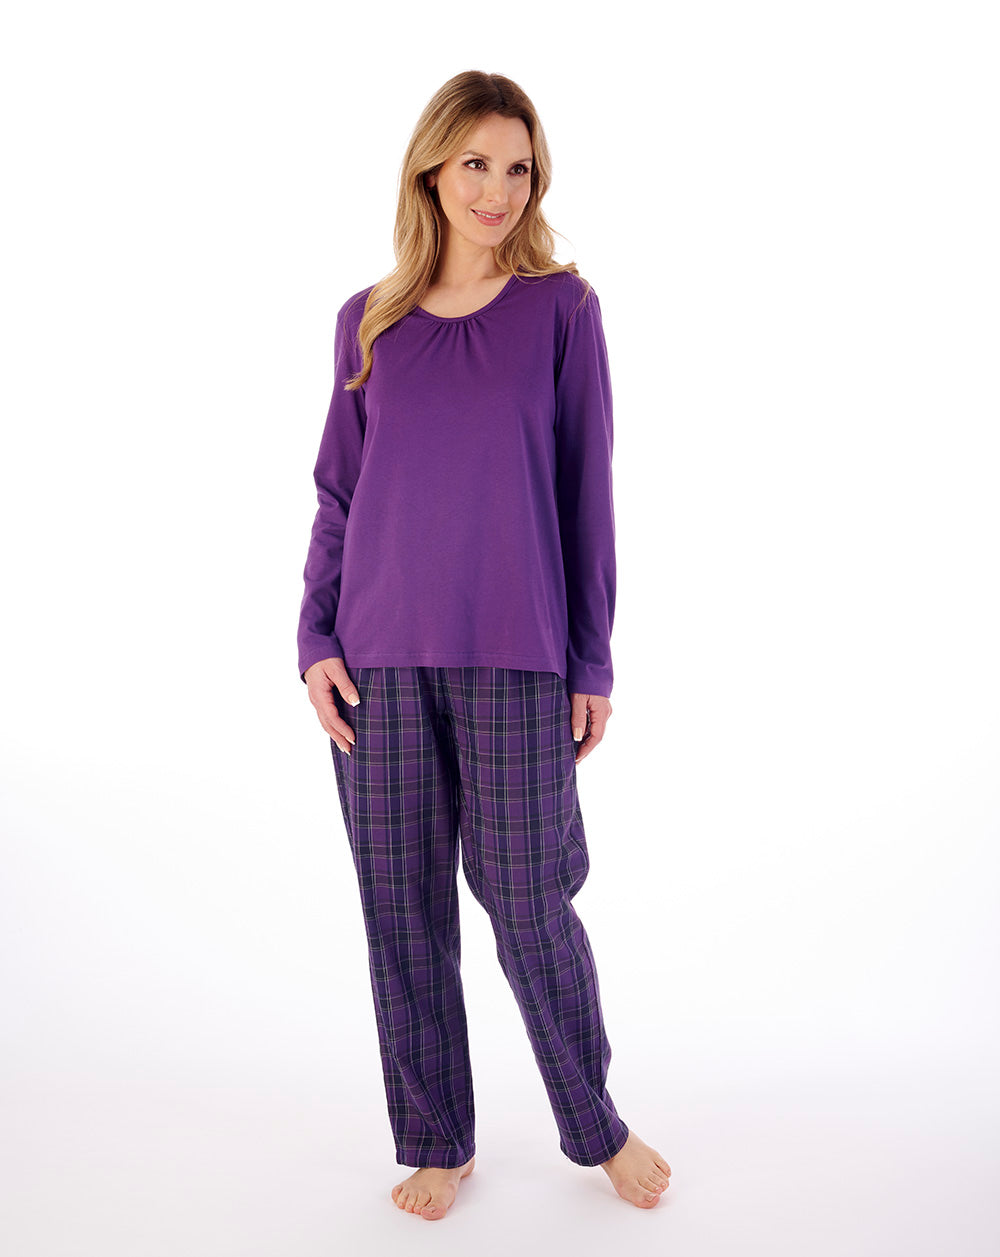 Woven Check & Jersey Long Sleeve Pyjama Set PJ02221